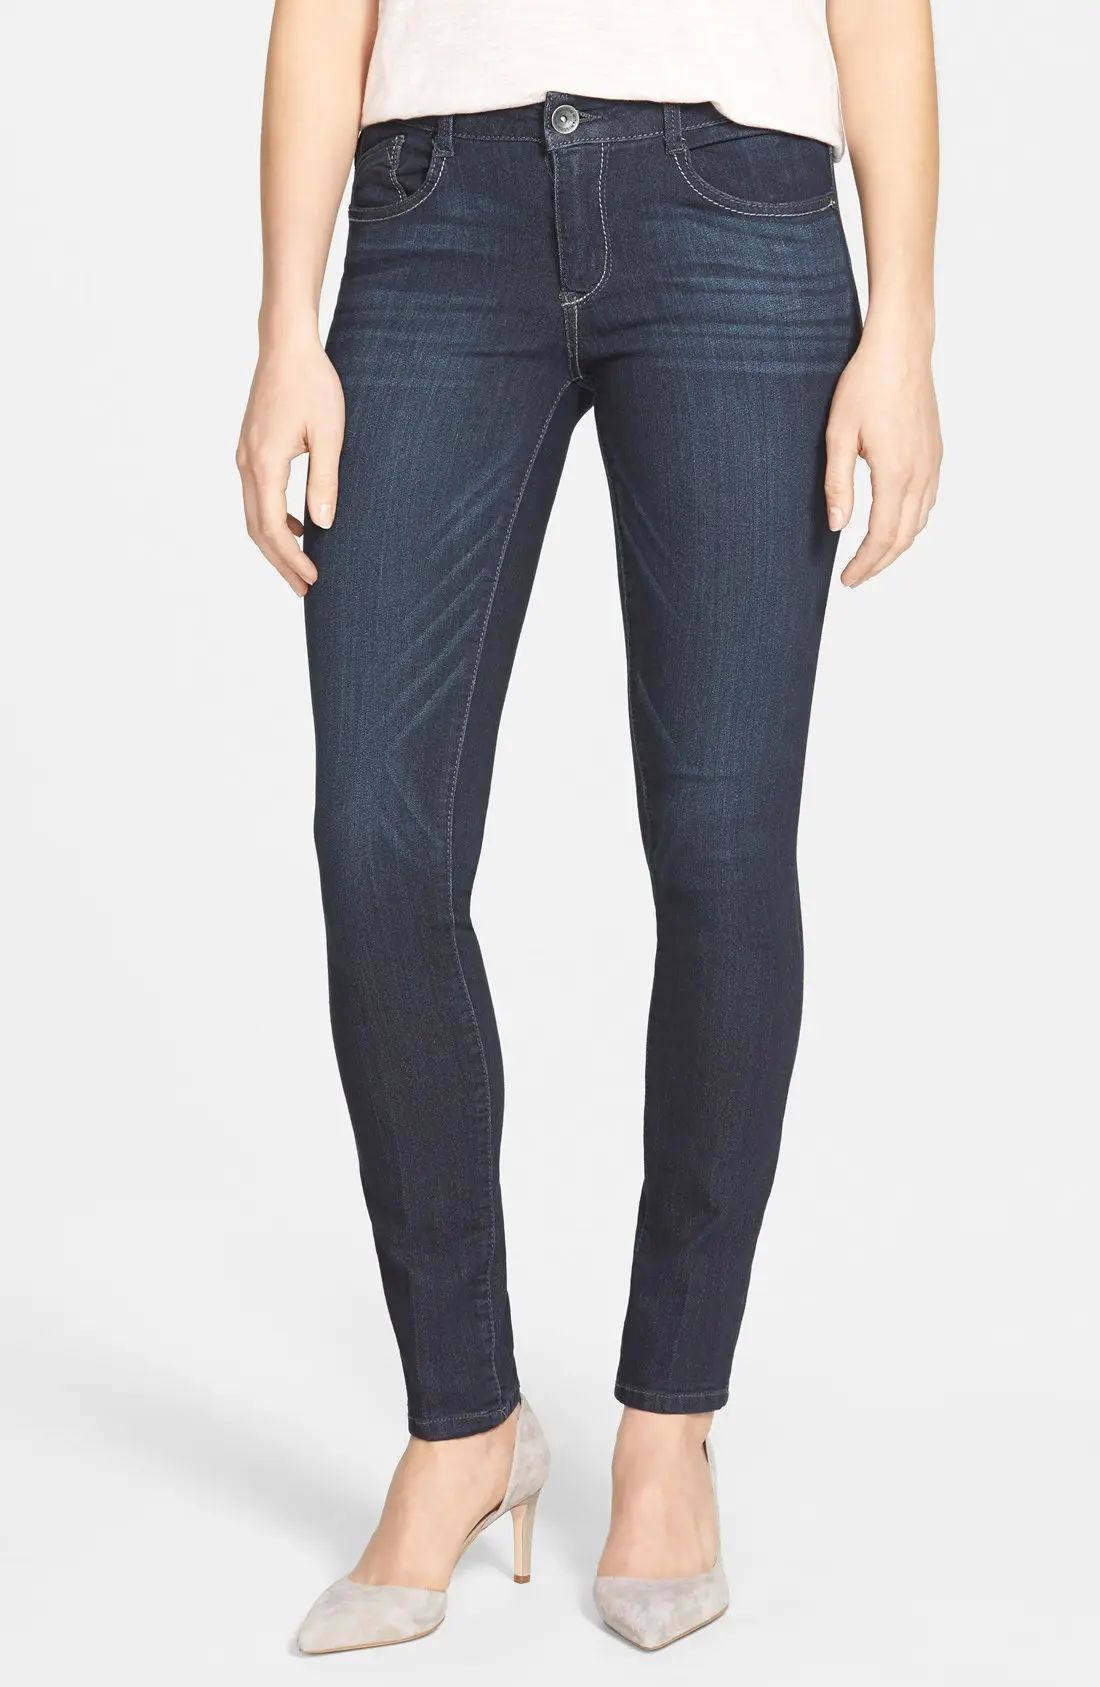 Wit & Wisdom Super Smooth Stretch Denim Skinny Jeans (Dark Navy) (Regular & Petite) (Nordstrom Exclu | Nordstrom